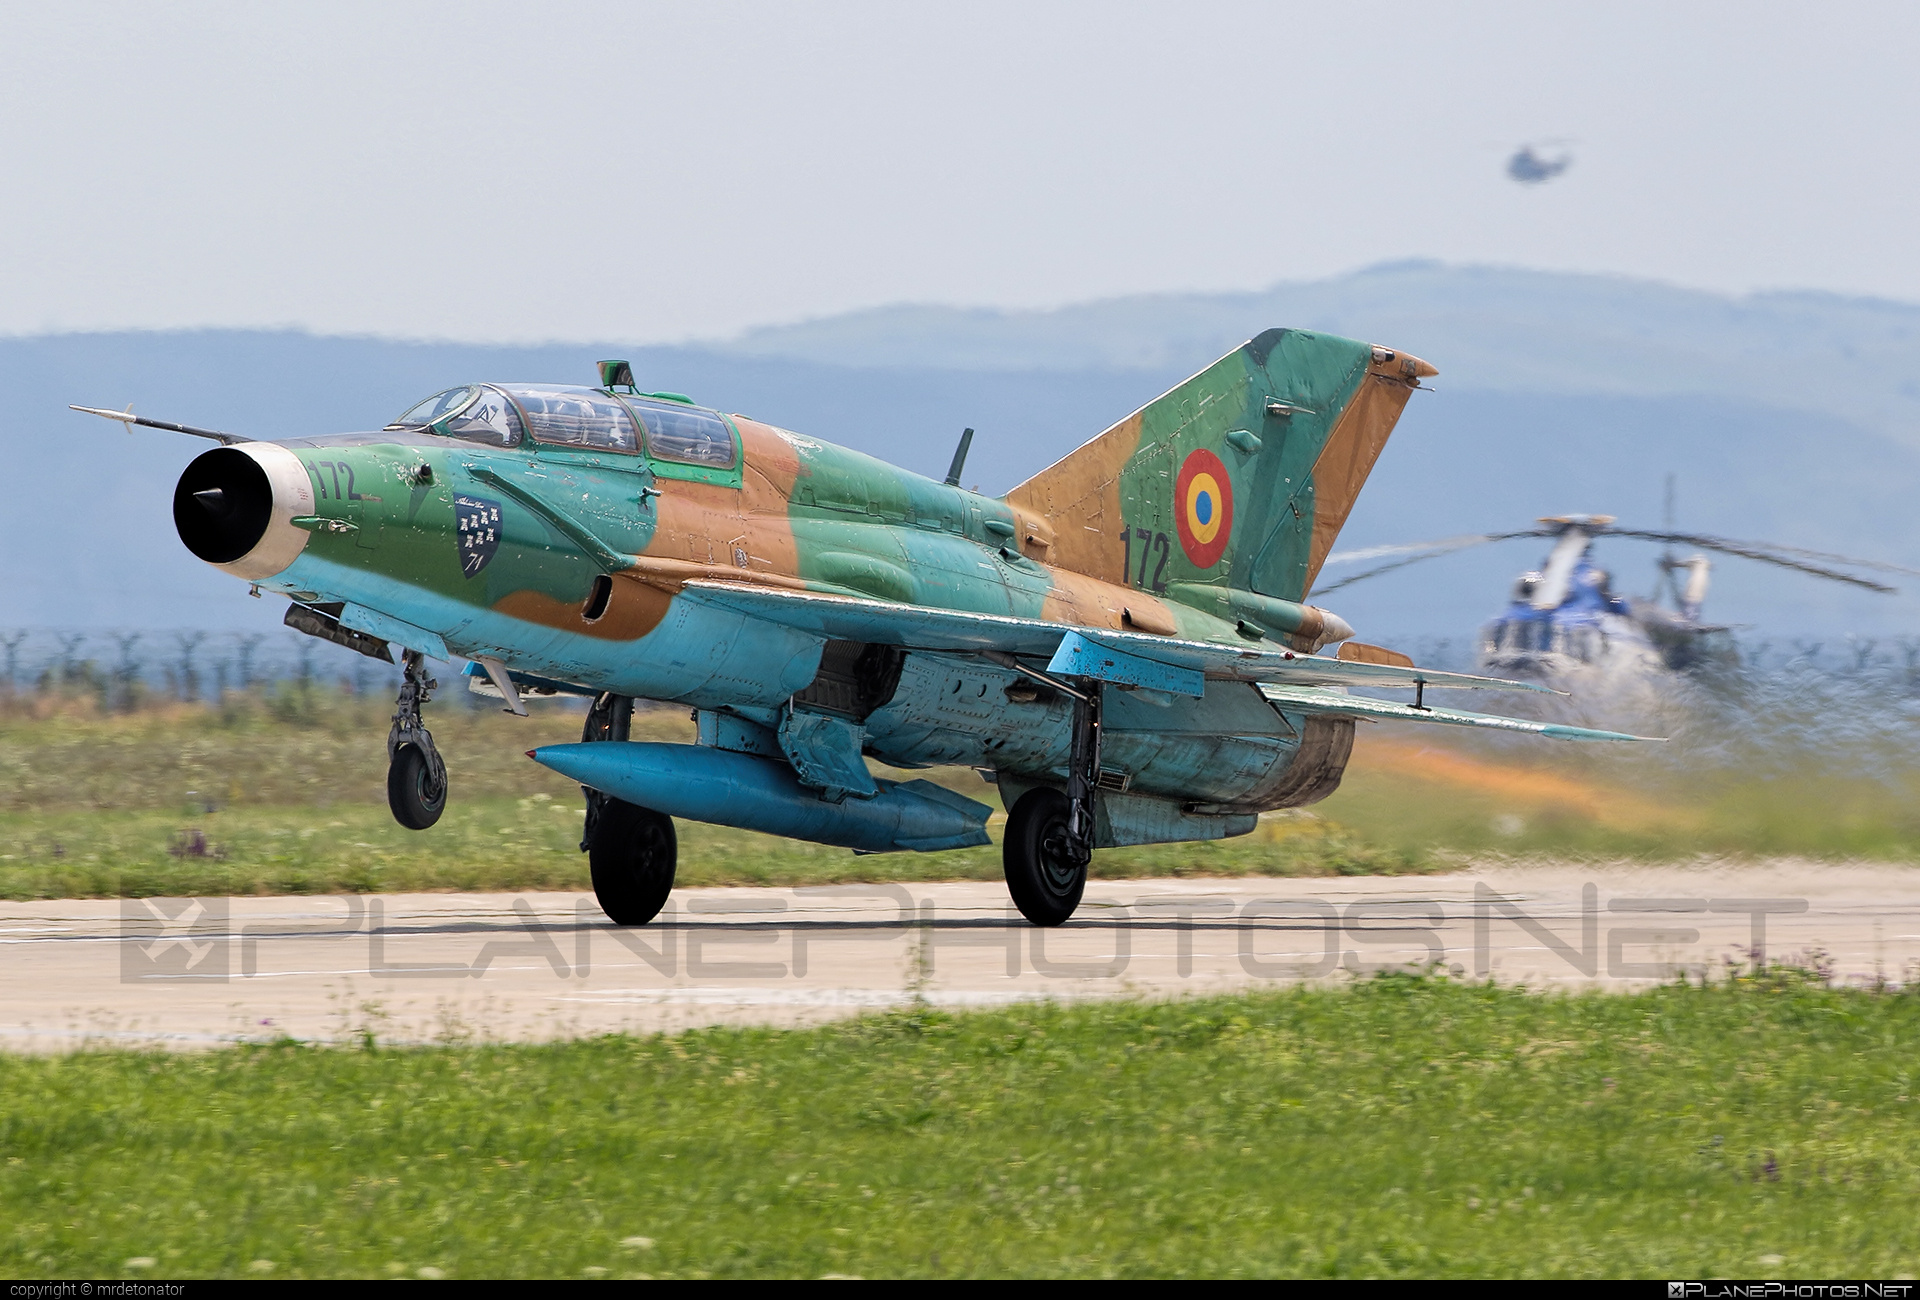 Mikoyan-Gurevich MiG-21UM - 172 operated by Forţele Aeriene Române (Romanian Air Force) #forteleaerieneromane #mig #mig21 #mig21um #mikoyangurevich #romanianairforce